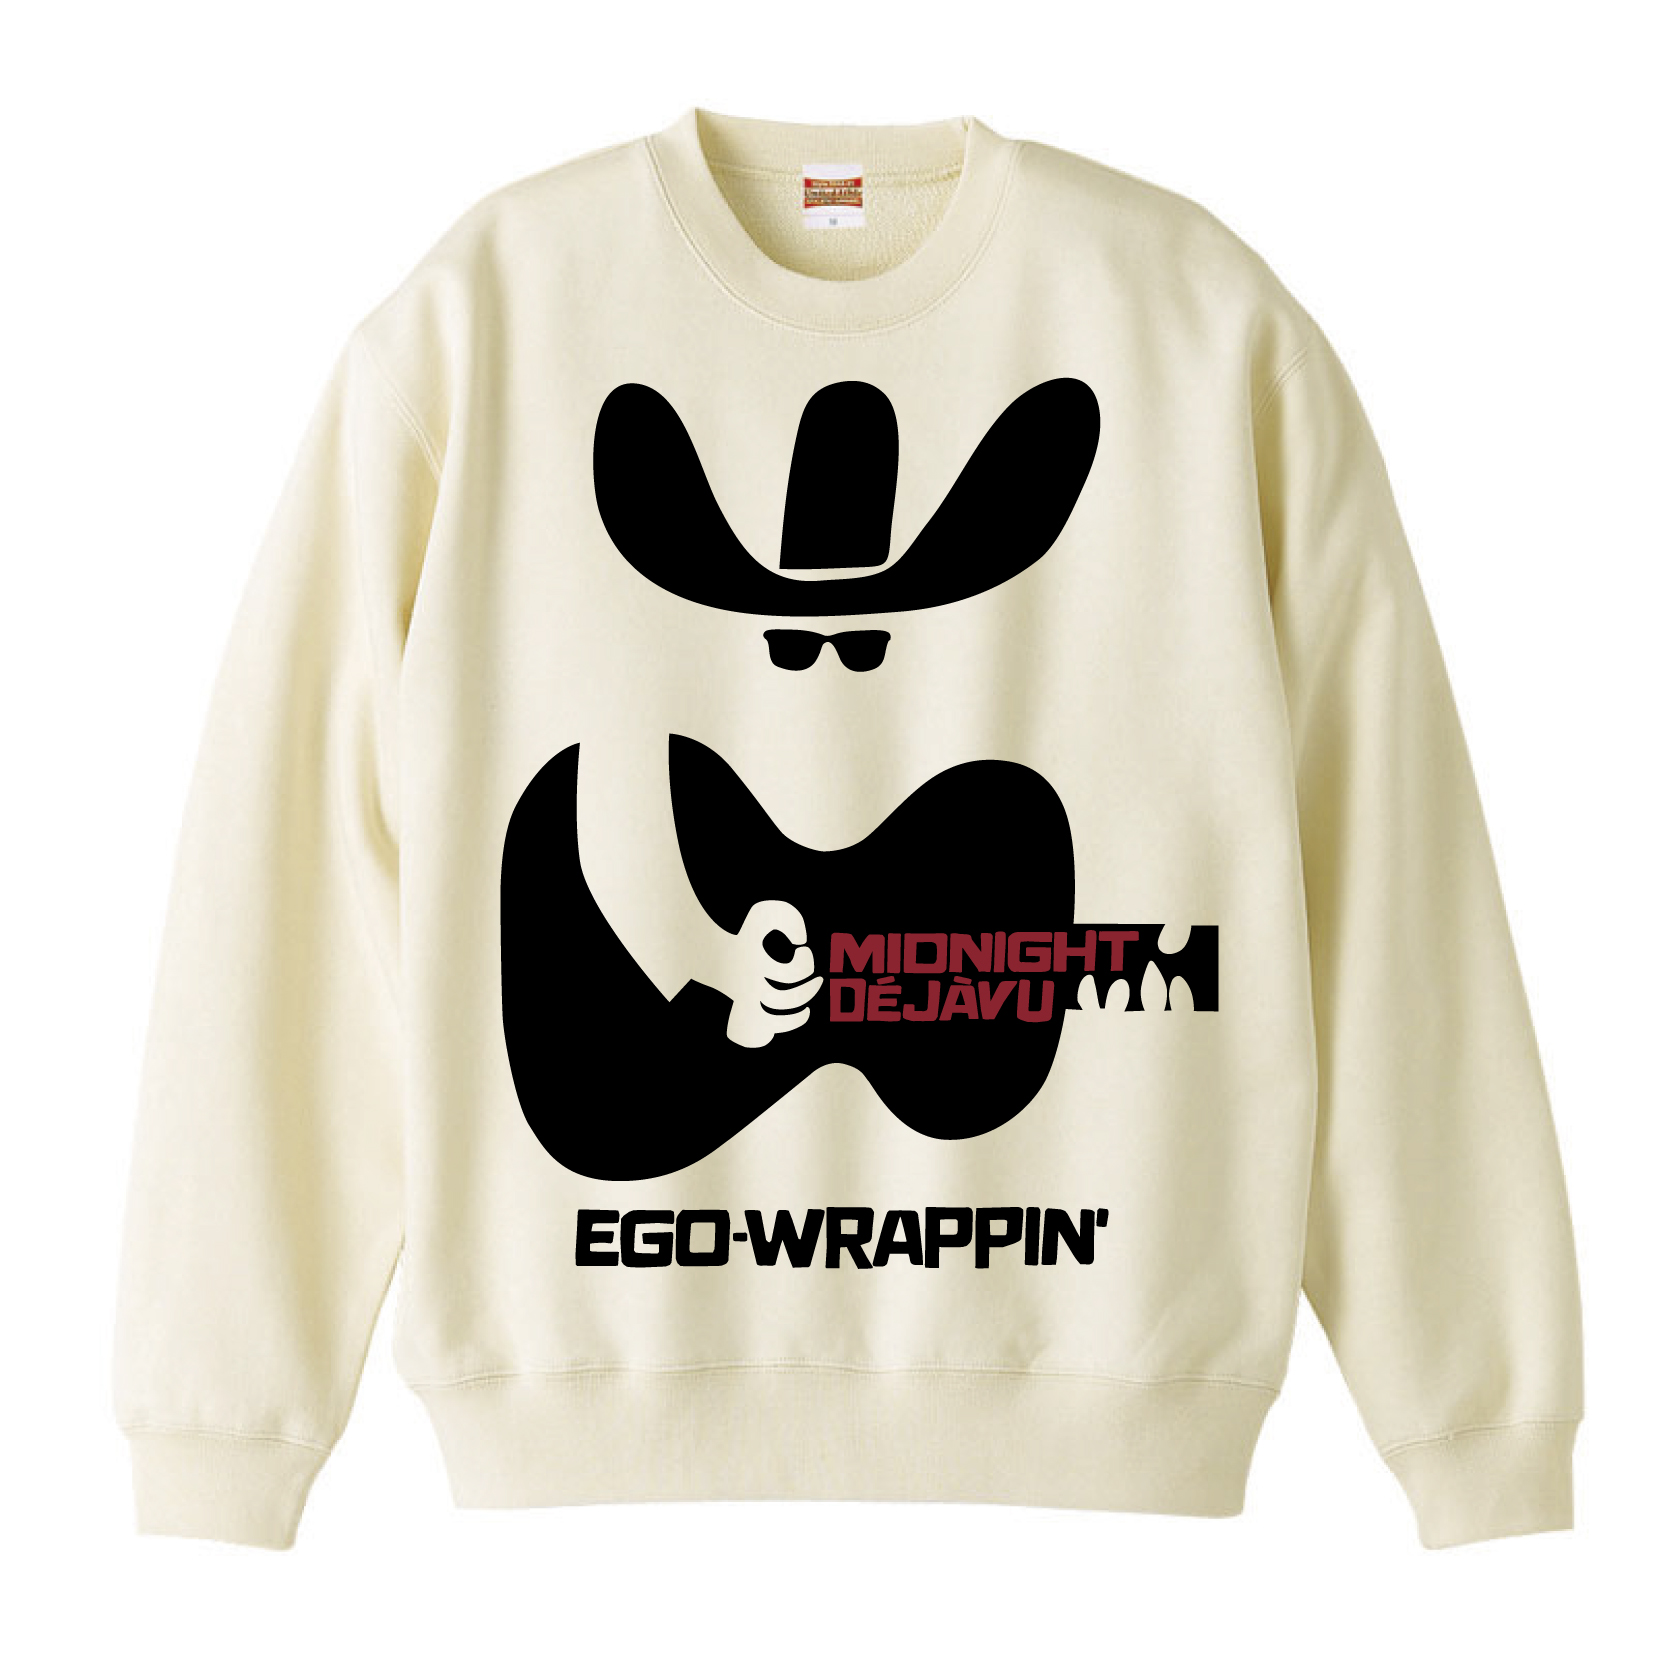 EGO-WRAPPIN'「Midnight Dejavu」 2018 Merchandise